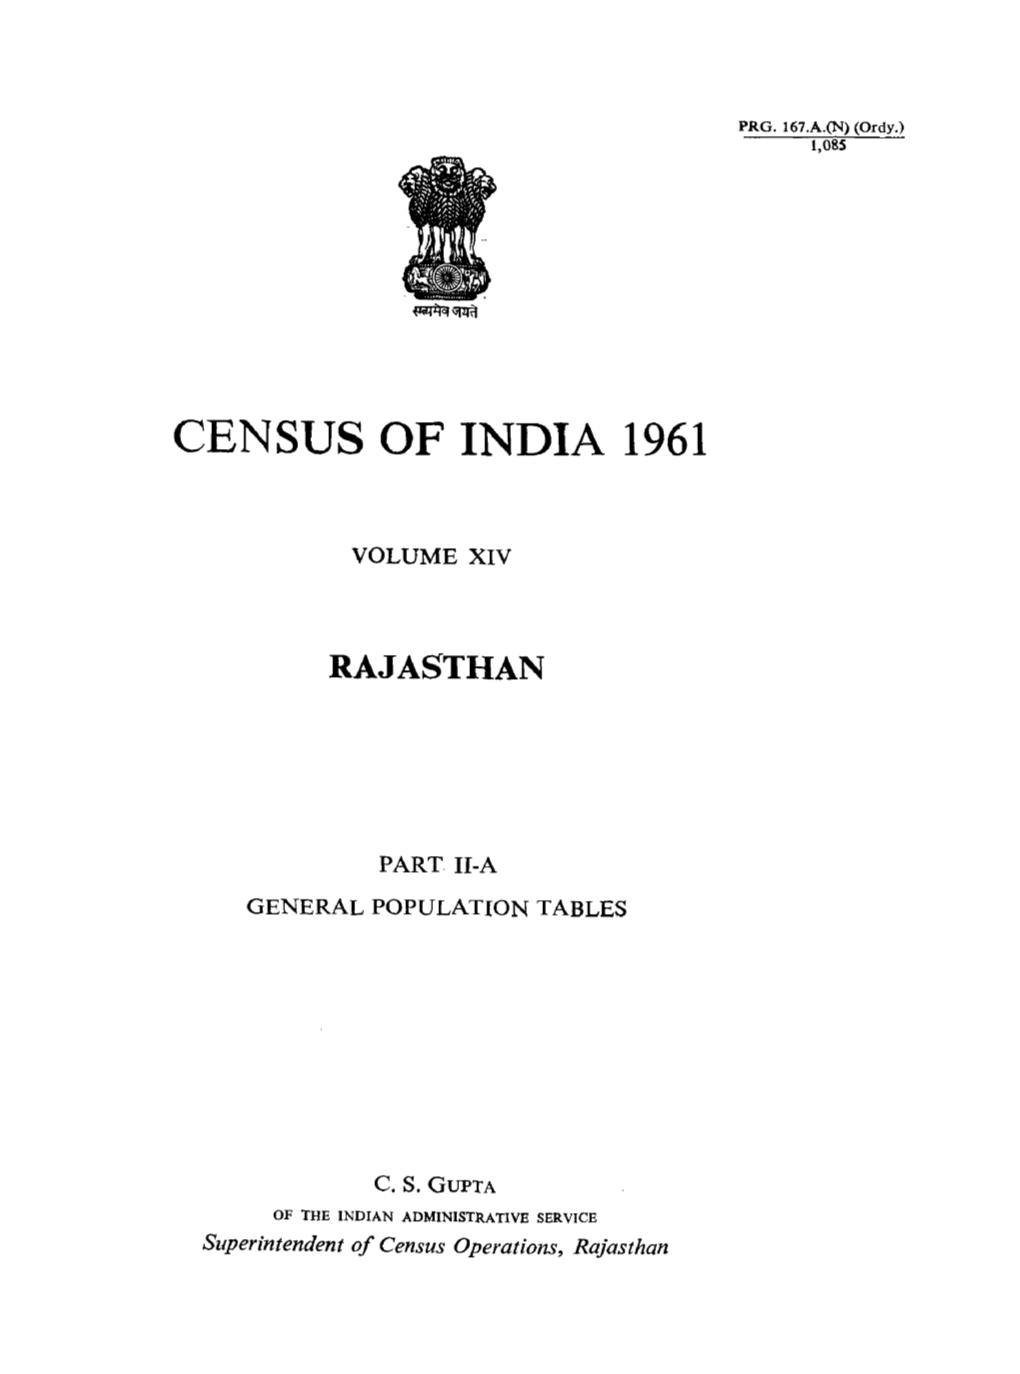 General Population Tables, Part II-A, Vol-XIV, Rajasthan